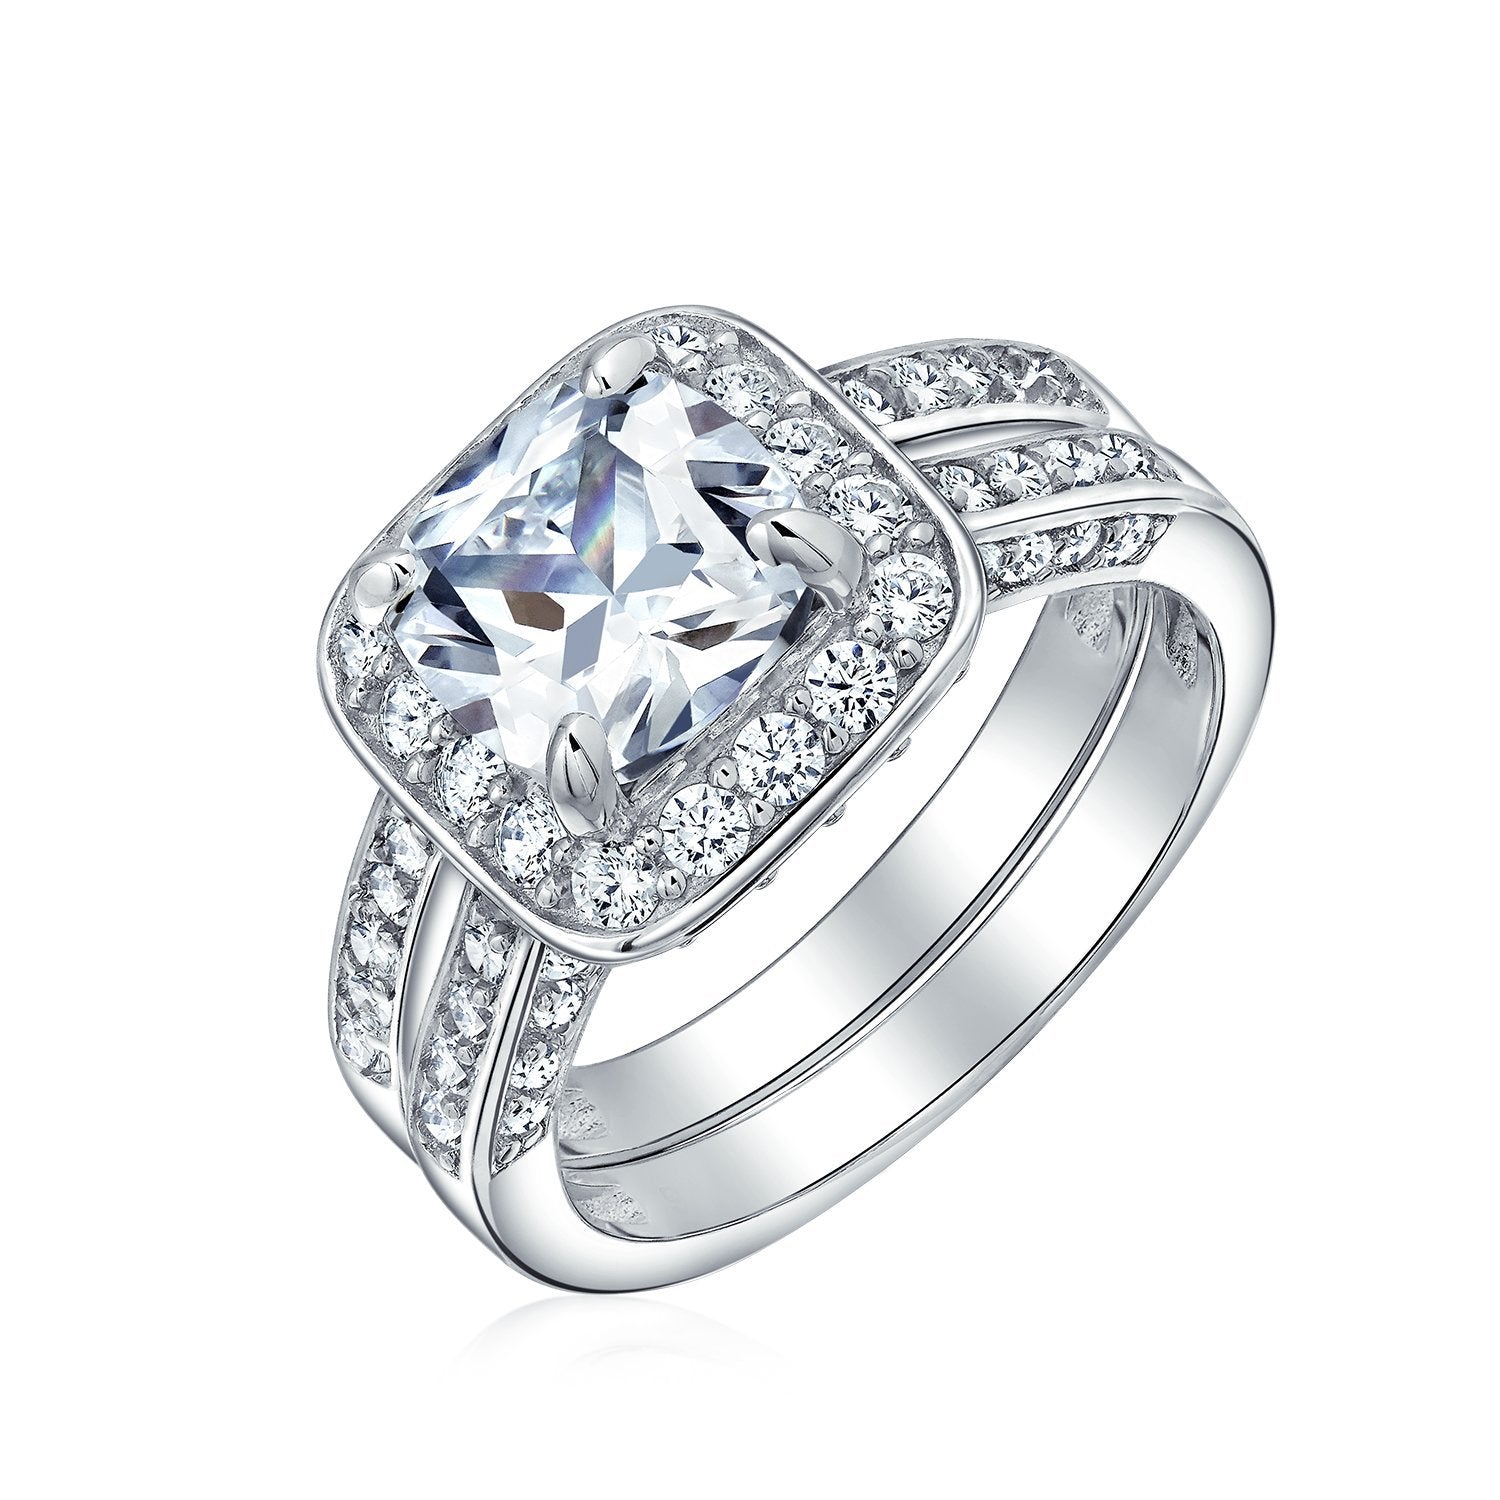 2CT Princess Cut Halo CZ Engagement Wedding Ring Set Sterling Silver - Joyeria Lady